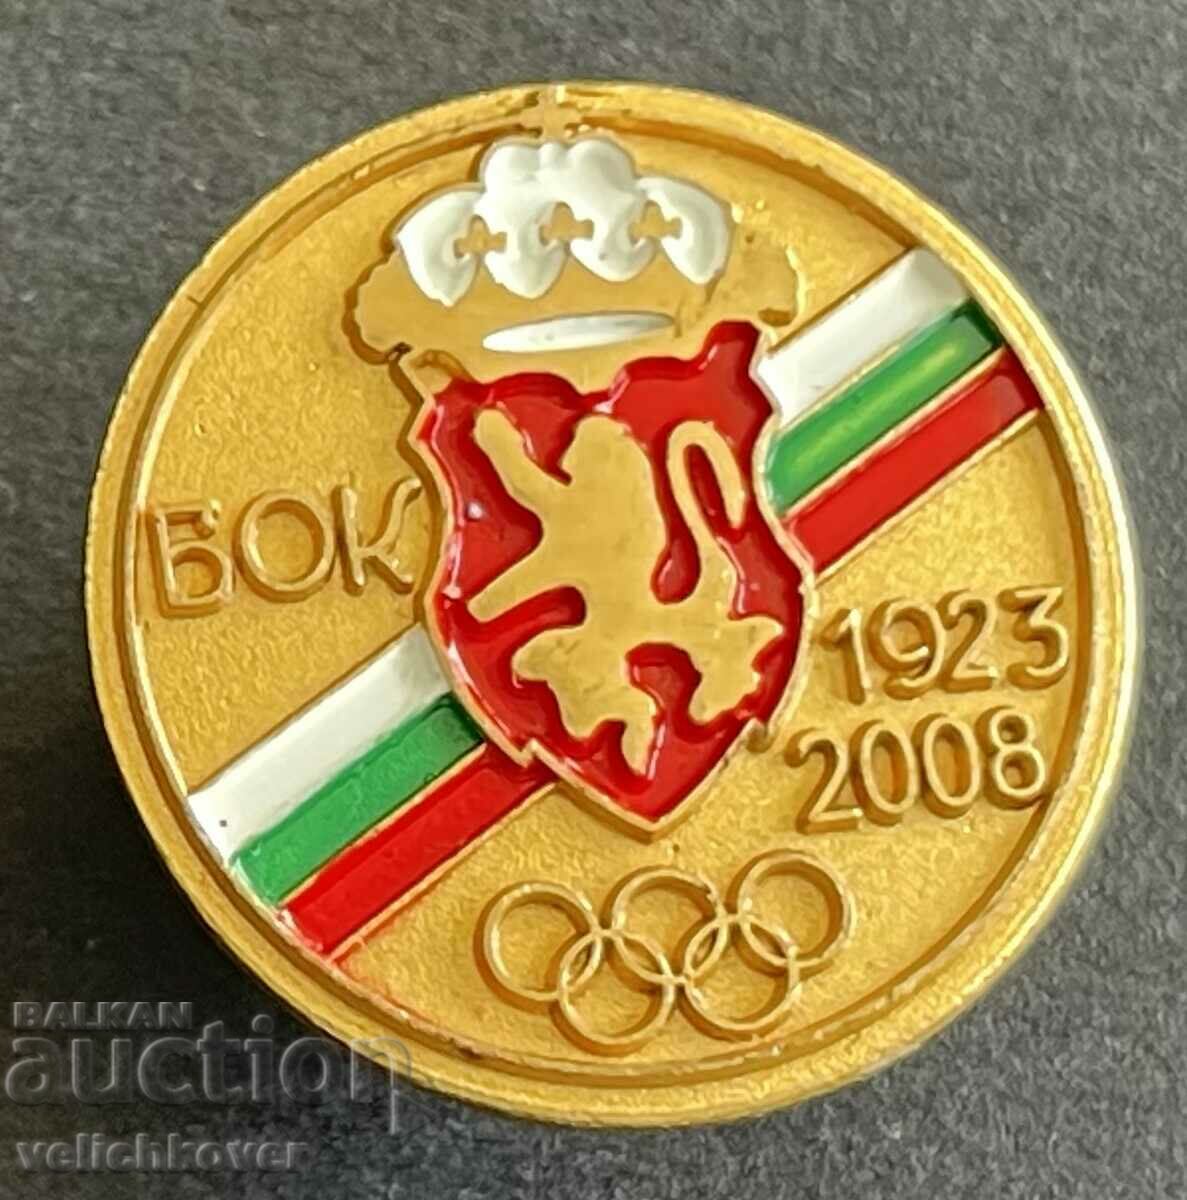 35457 Bulgaria sign 85 BOK Bulgarian Olympic Committee 2008